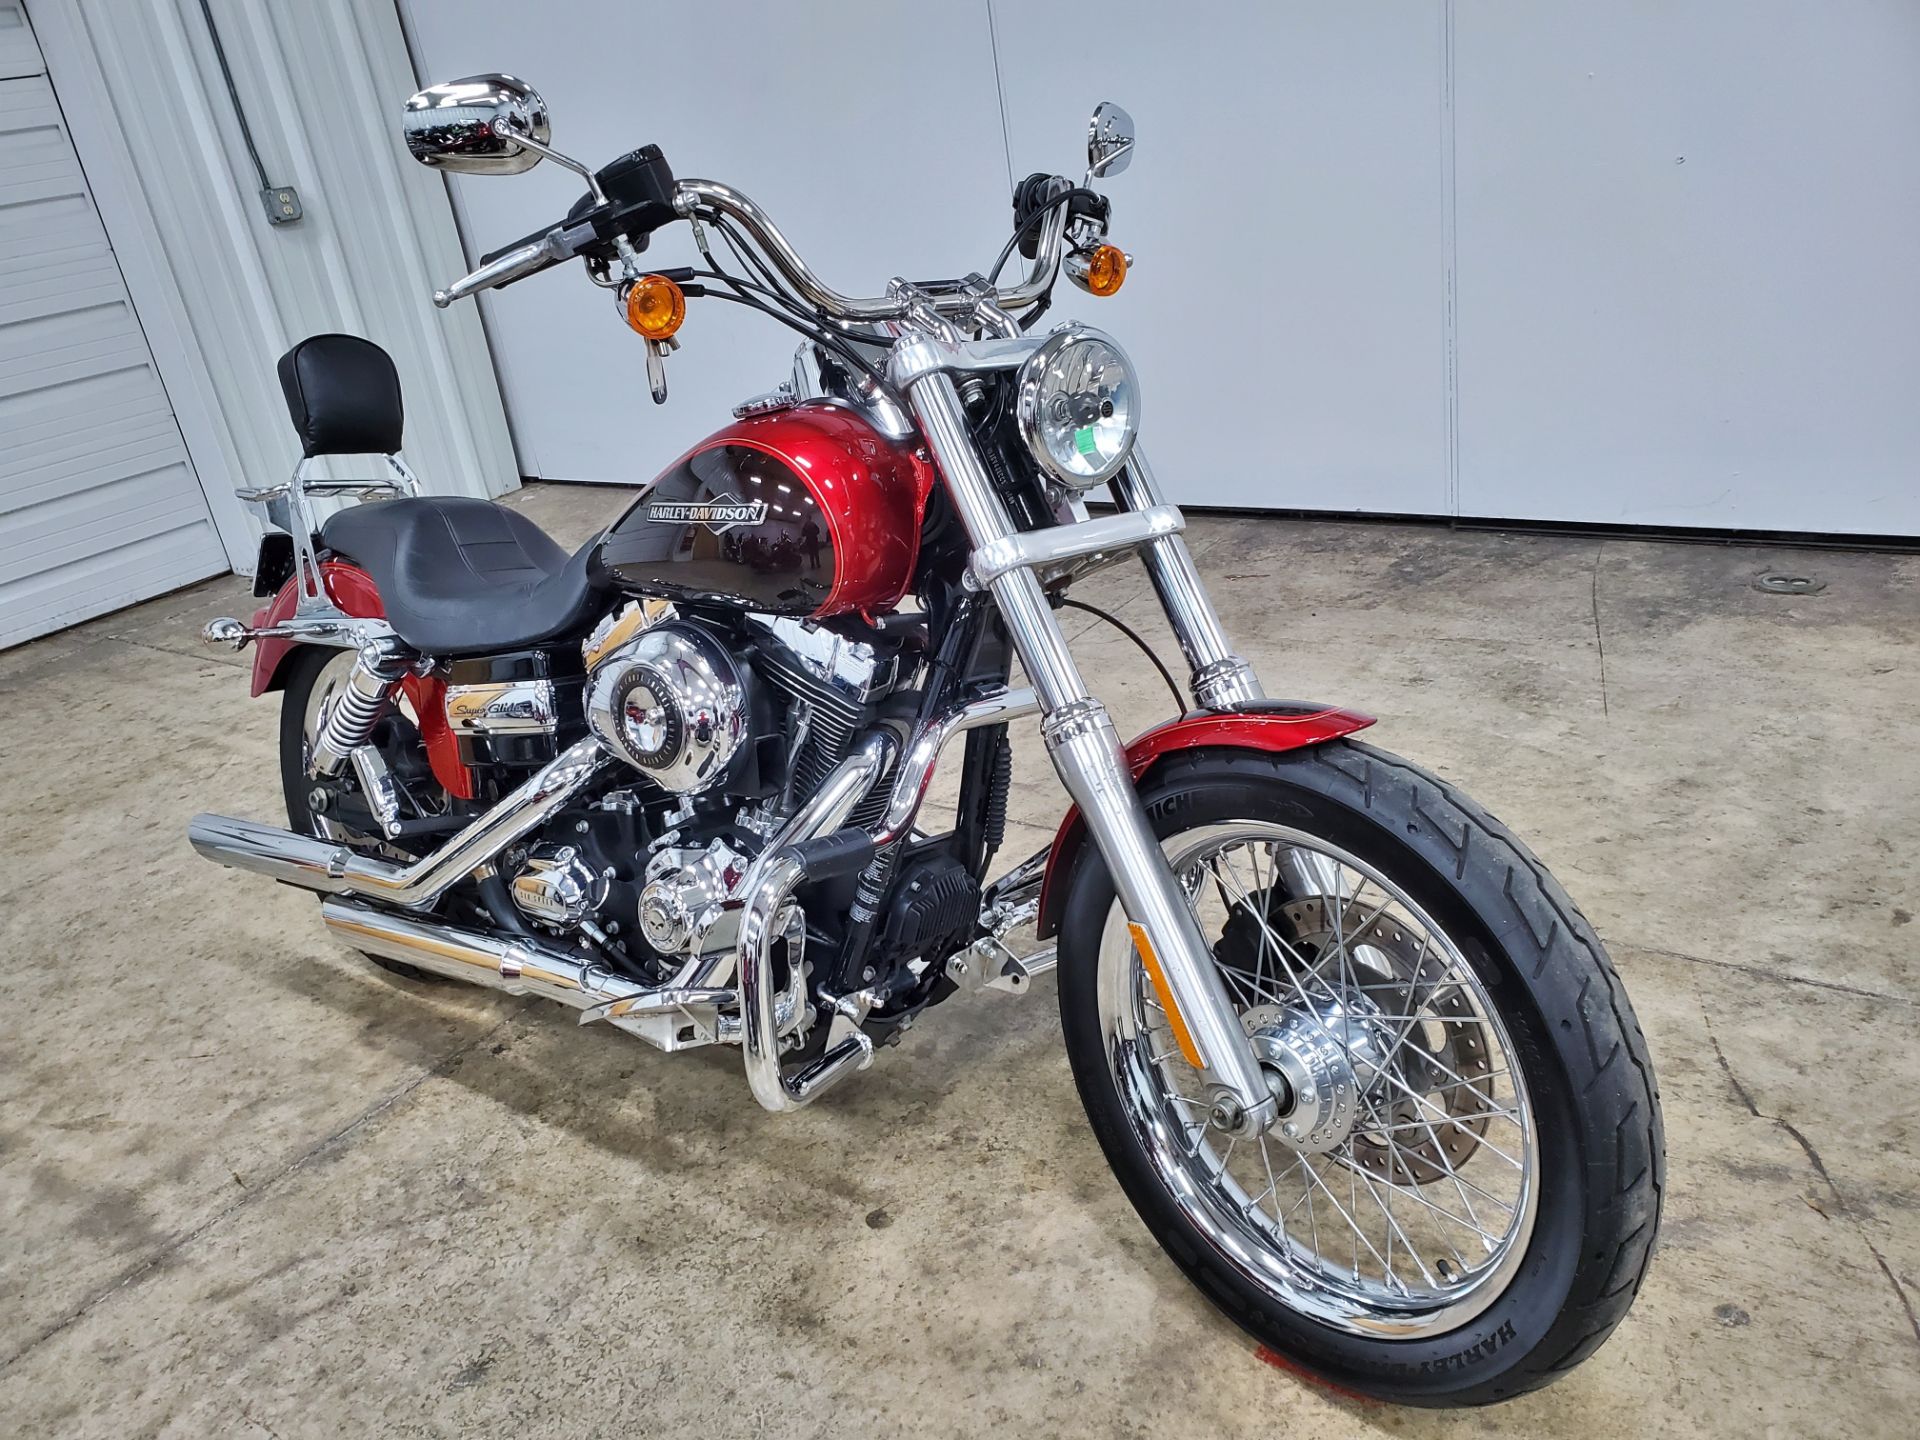 2012 Harley-Davidson Dyna® Super Glide® Custom in Sandusky, Ohio - Photo 3